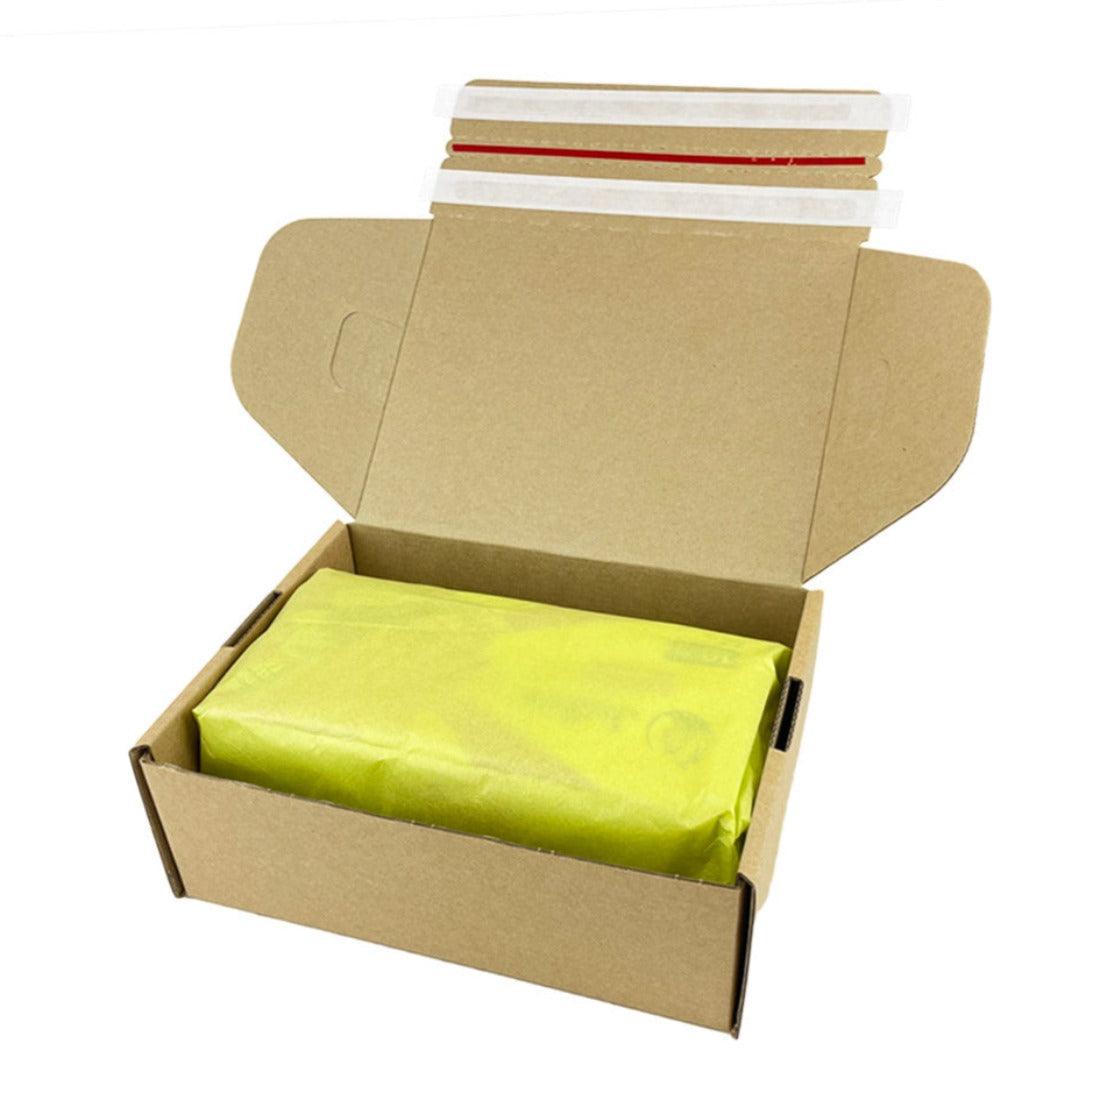 Self Sealing A5 Mailing Box 220 x 160 x 77mm B140 BoxMore